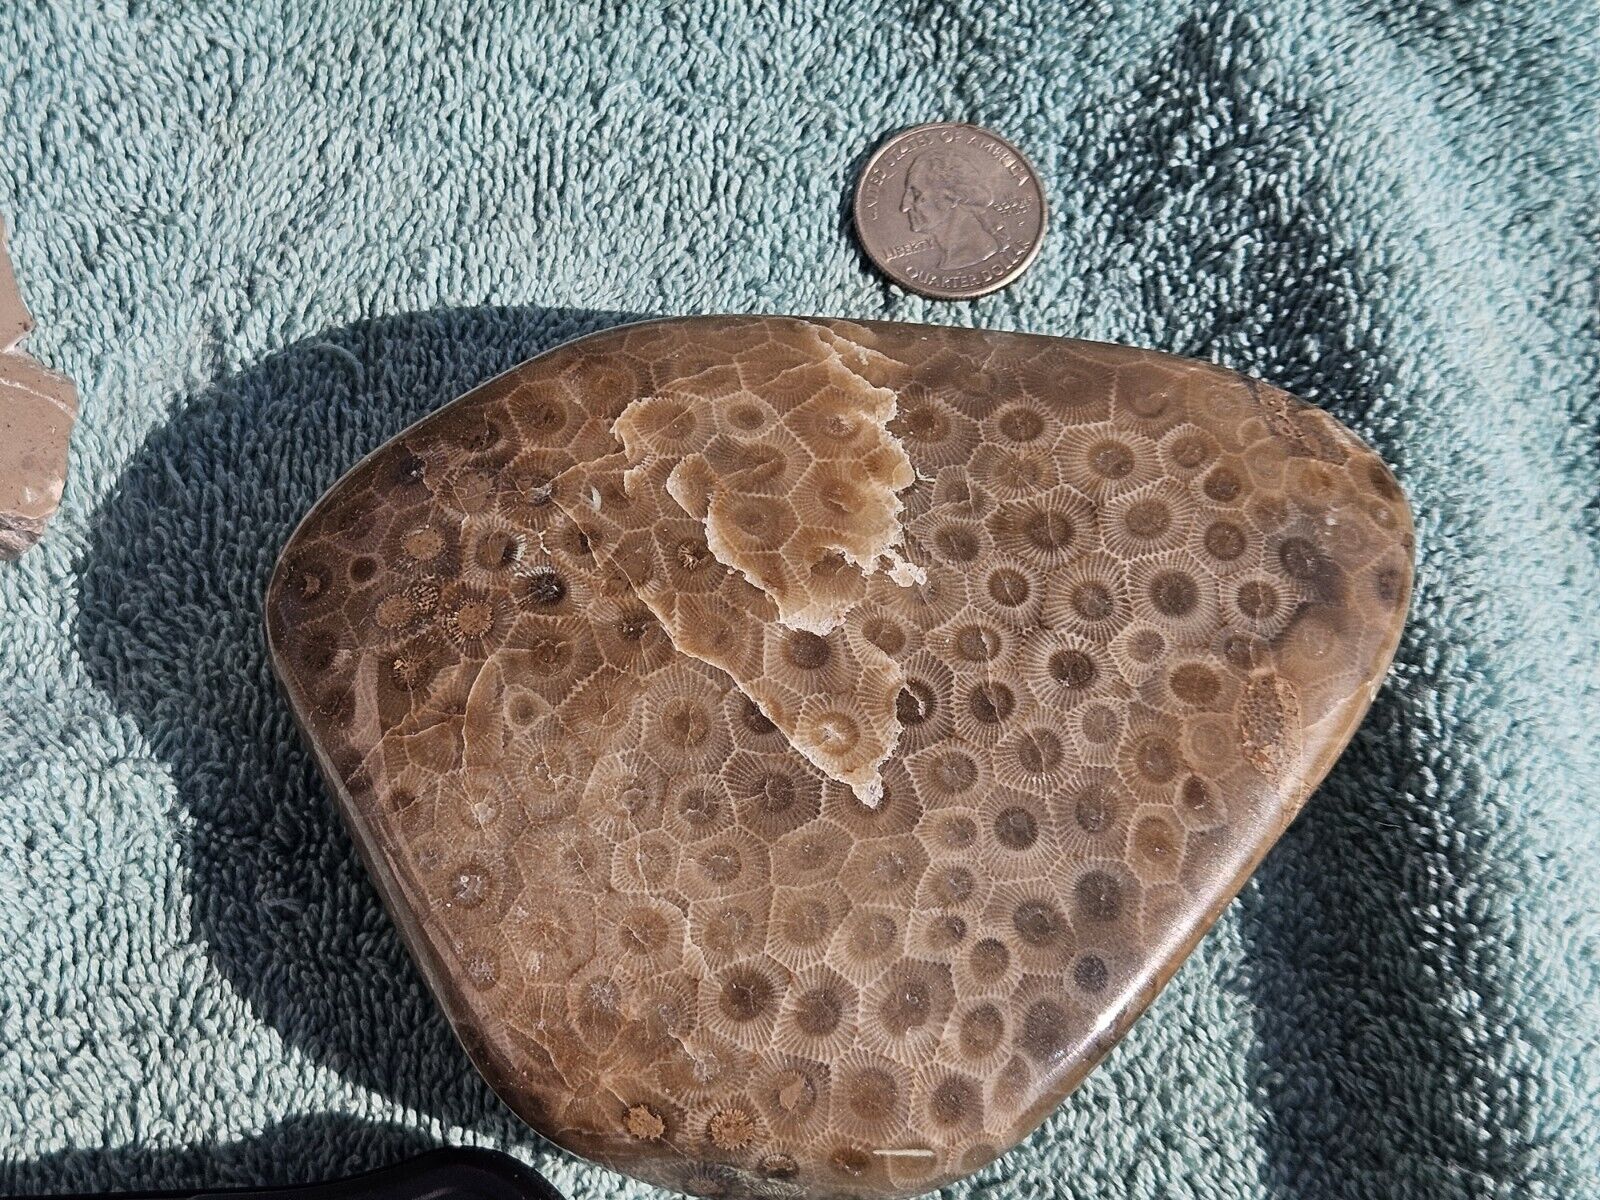 Petoskey Stone Hand Polished Hexagonaria Fossil 22.64oz Monster Unique